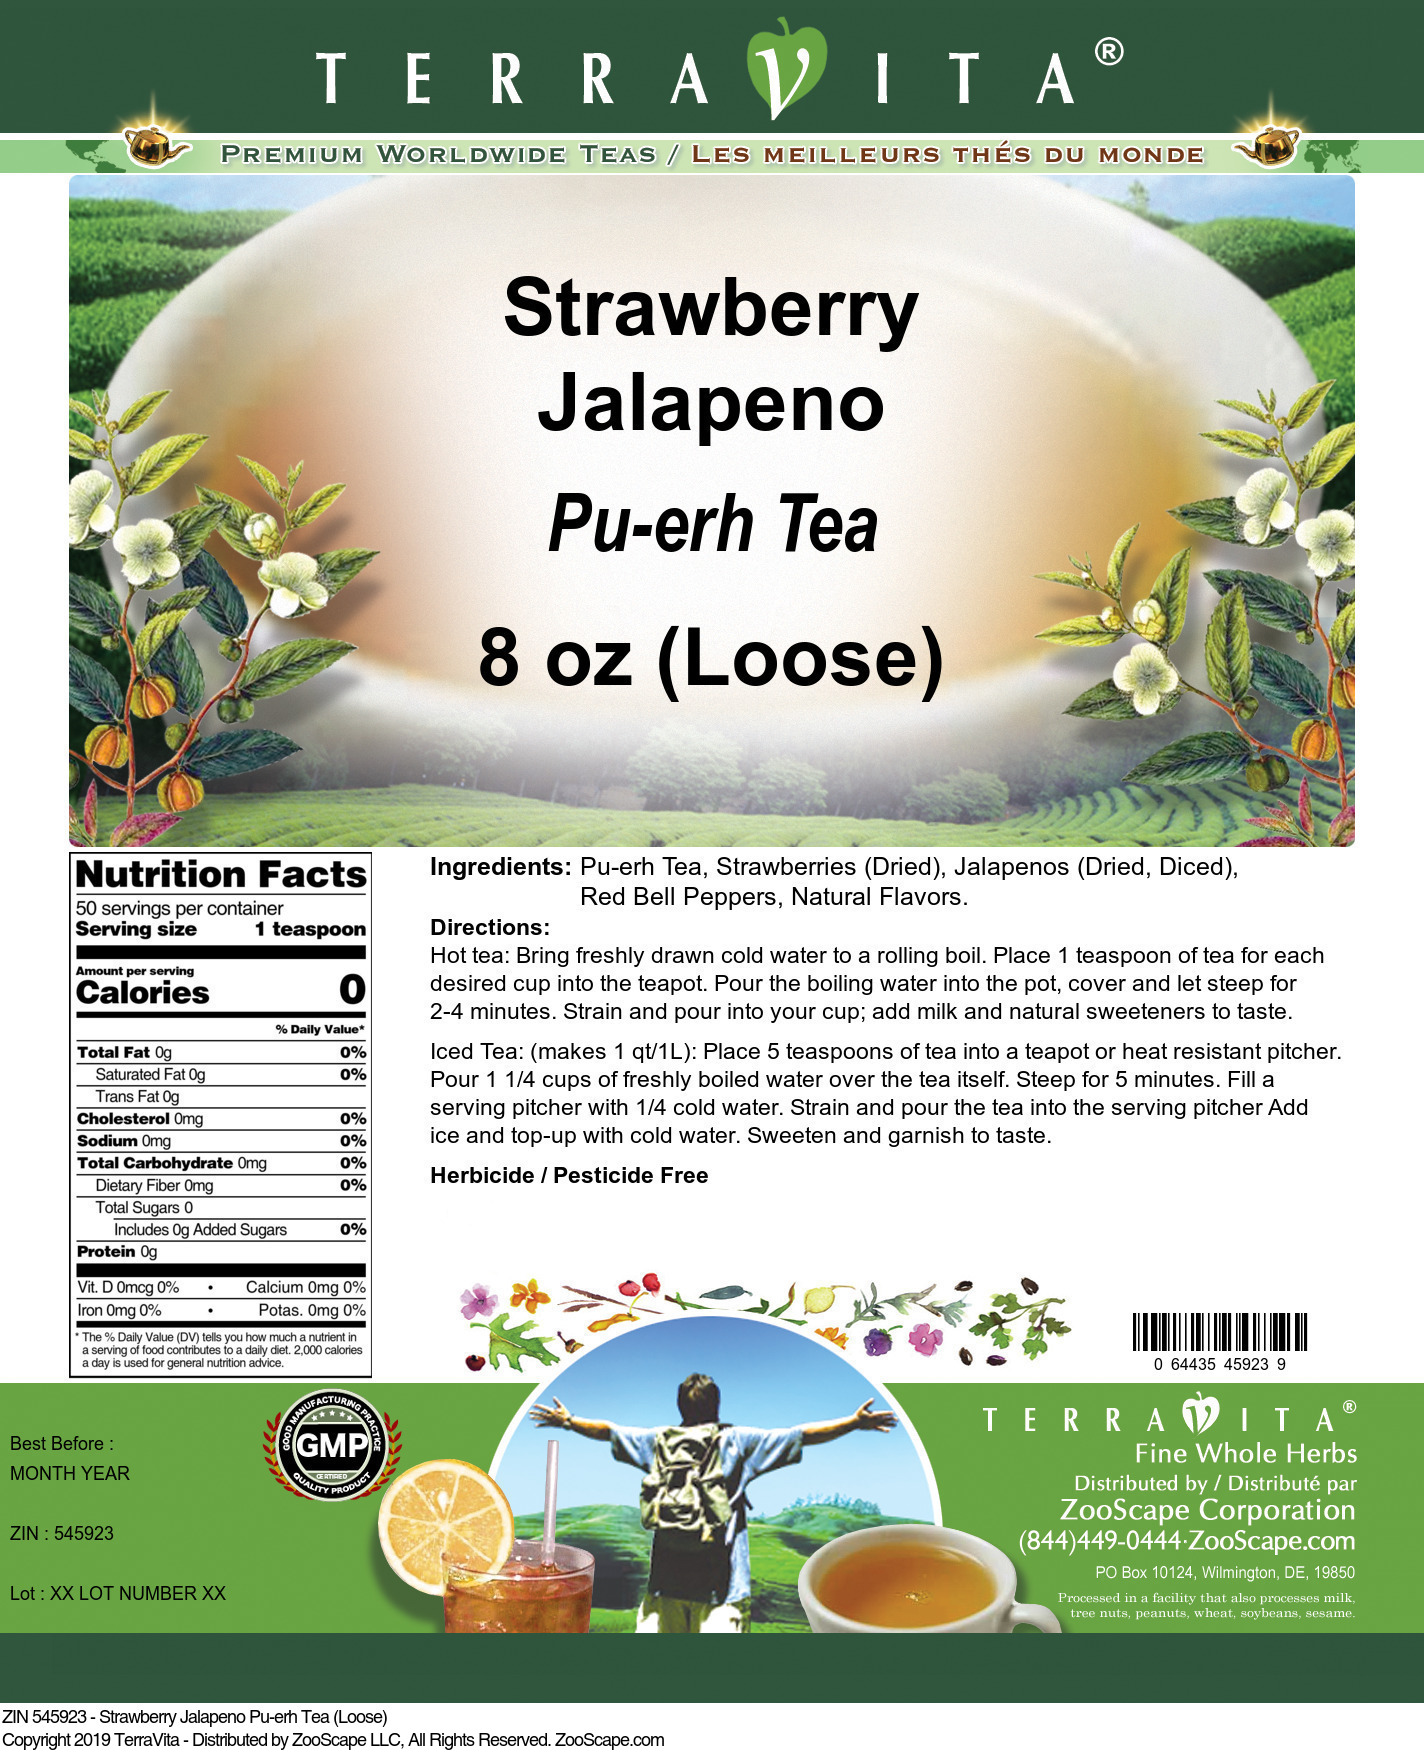 Strawberry Jalapeno Pu-erh Tea (Loose) - Label